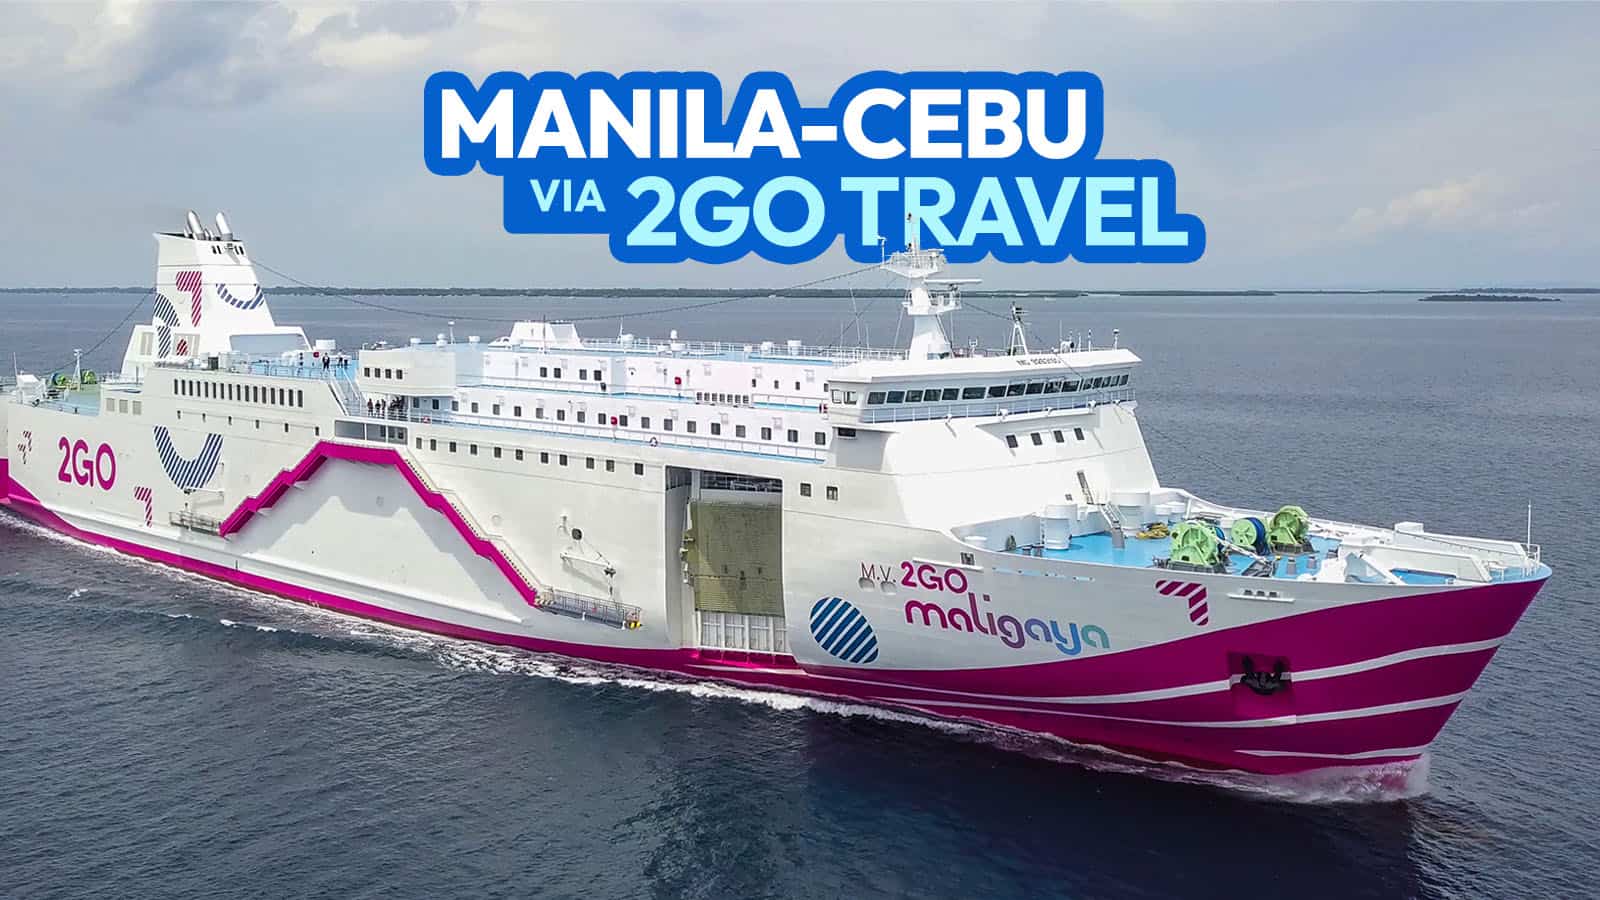 2go travel manila to cebu ticket price 2022